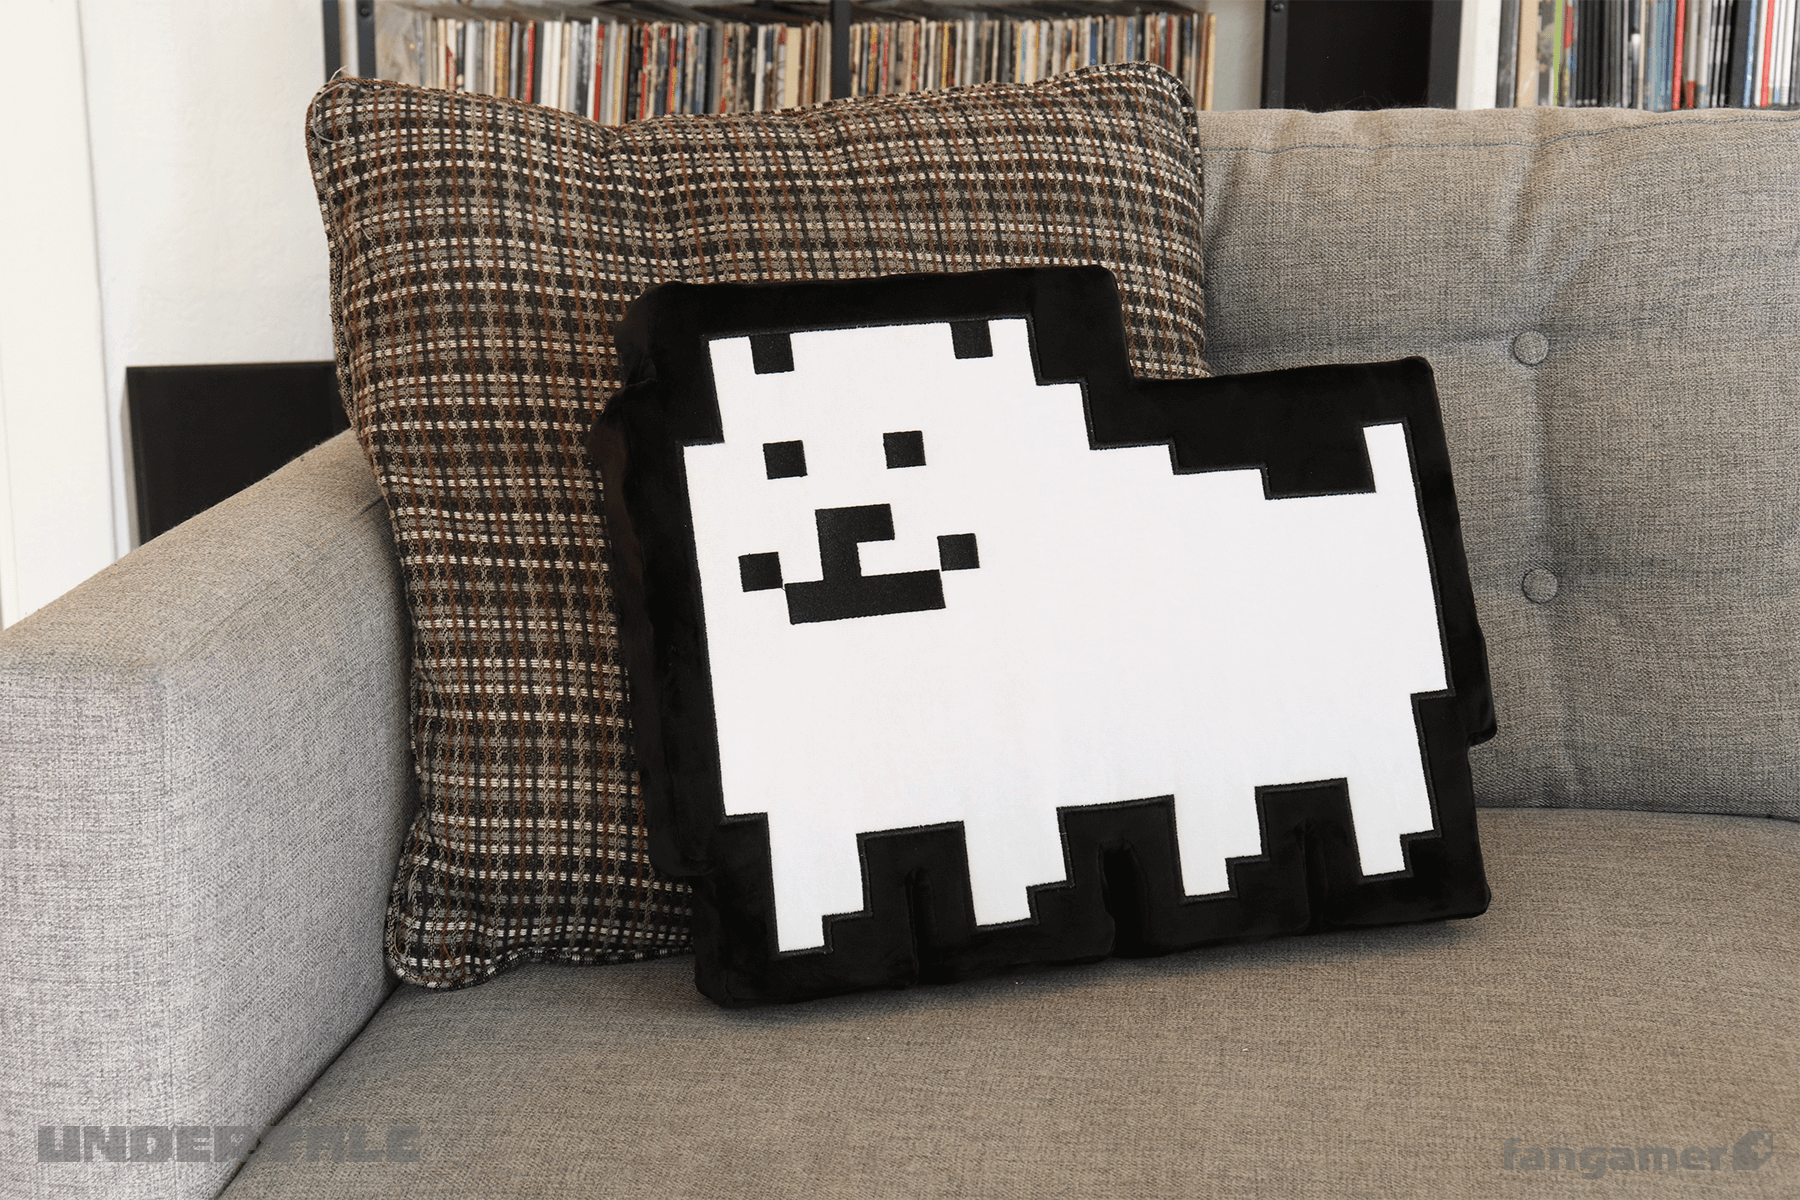 Gamer pillow, gamer cushion, playstation cushion, Gamer legend